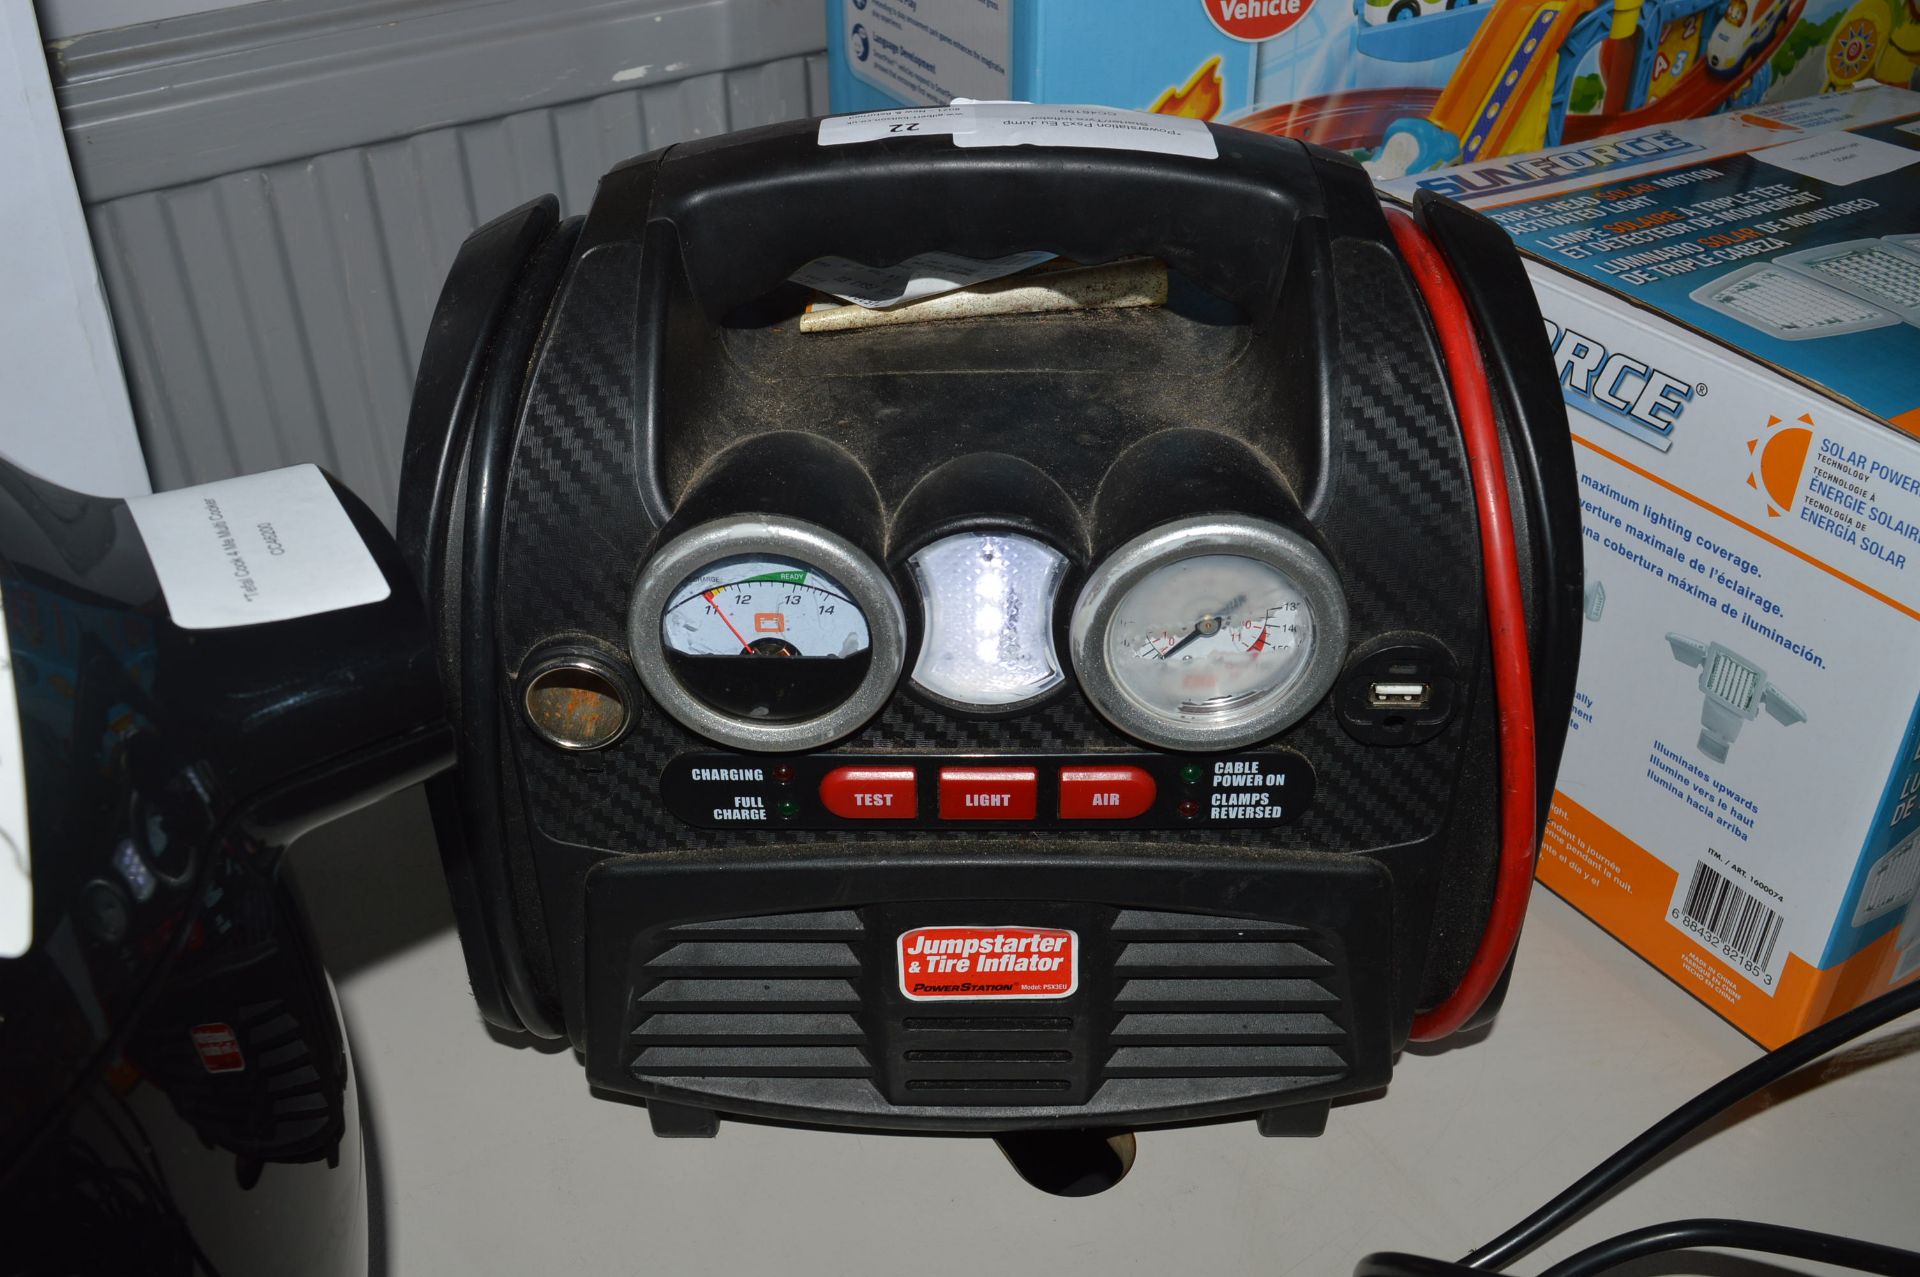 *Powerstation Psx3 Eu Jump Starter/Tyre Inflator - Image 2 of 2